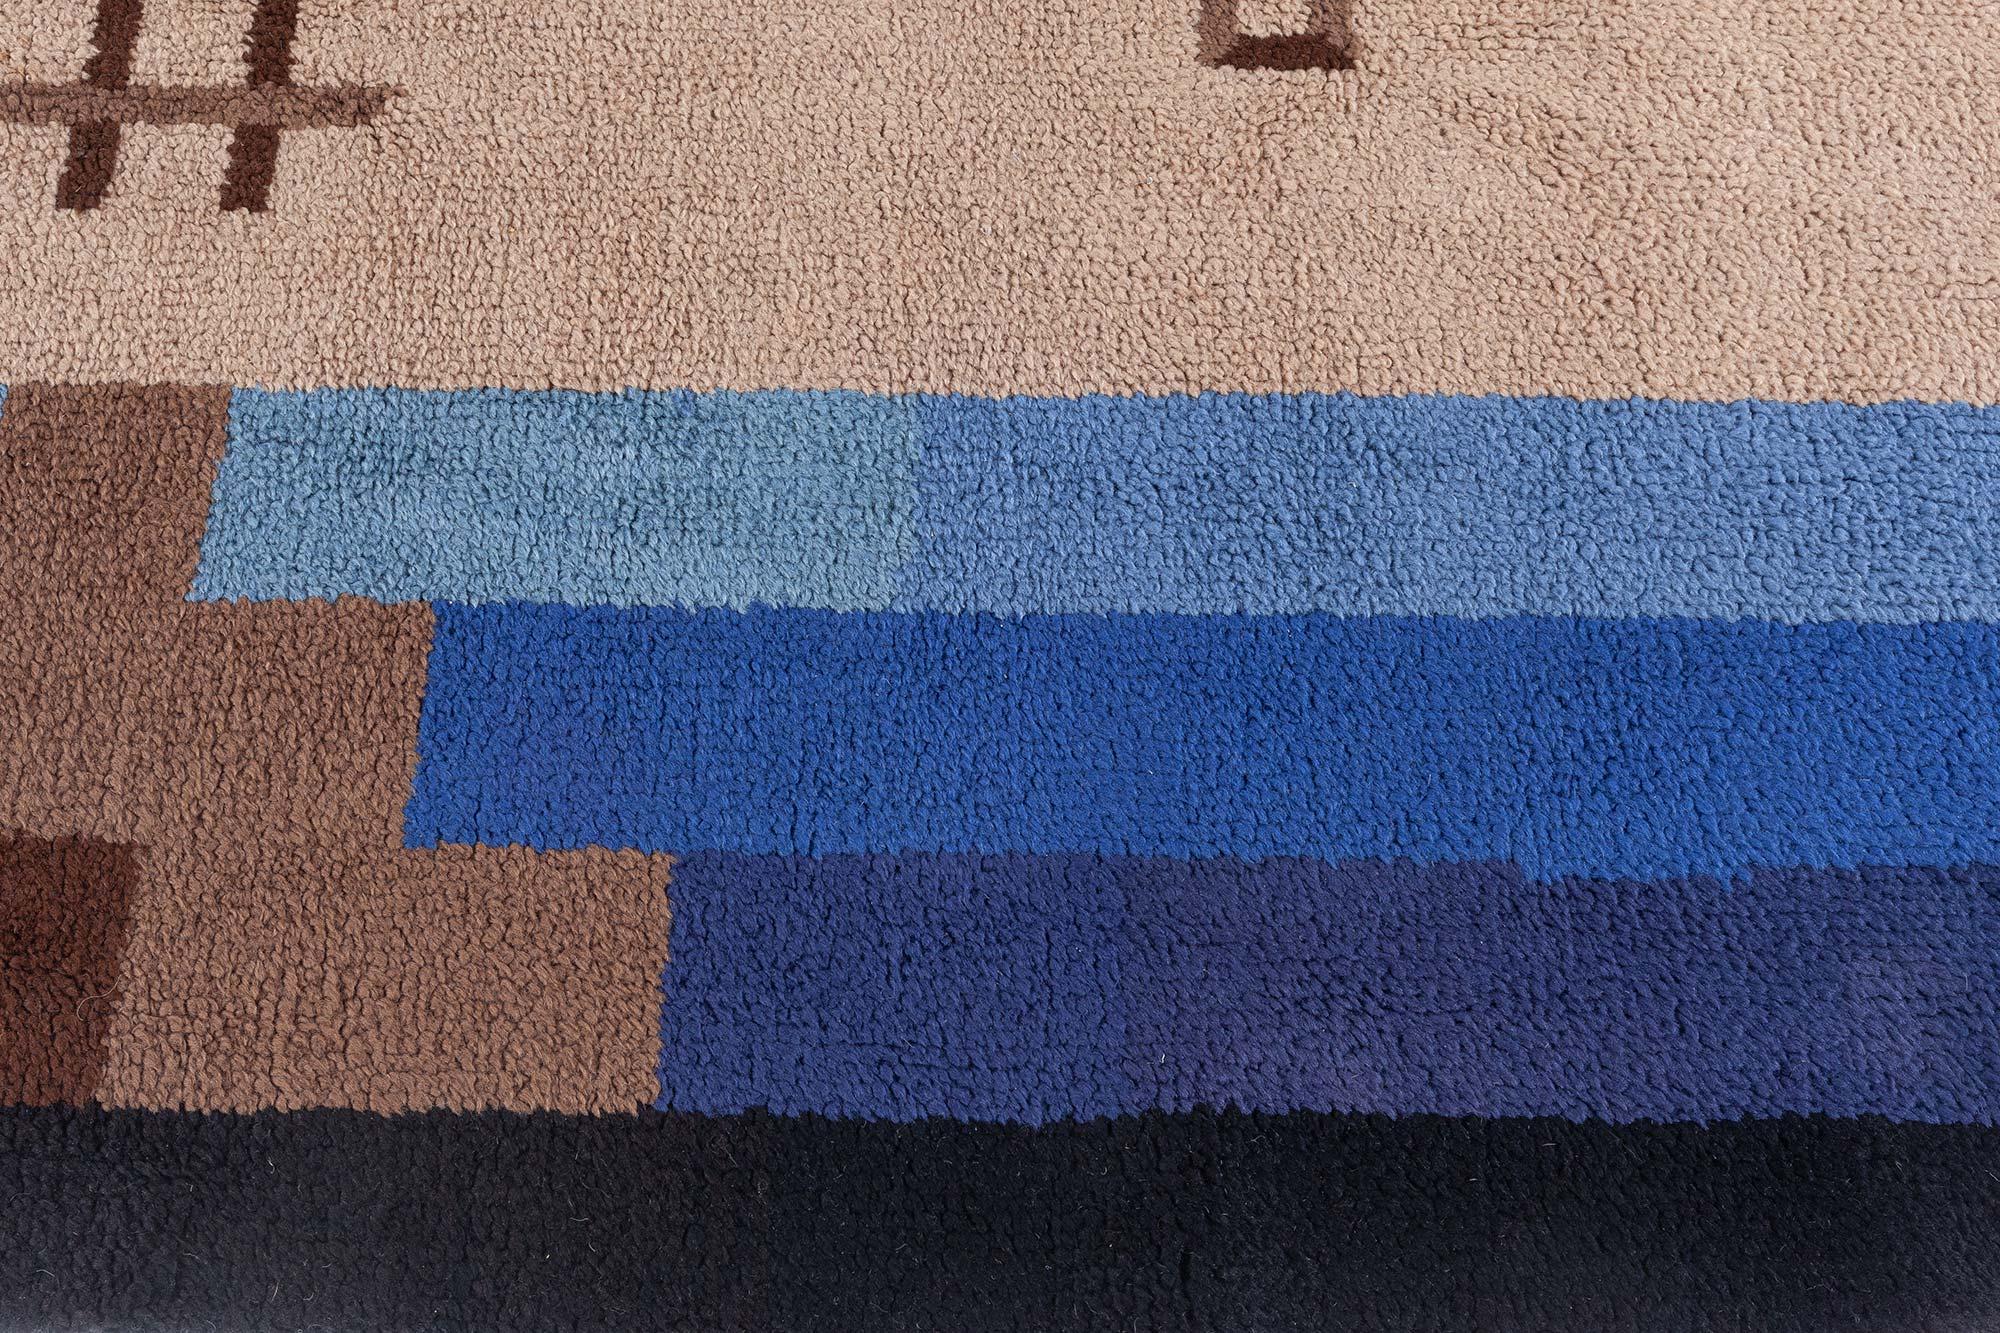 Mid-20th century Bold French Art Deco handmade wool rug.
Size: 6'8